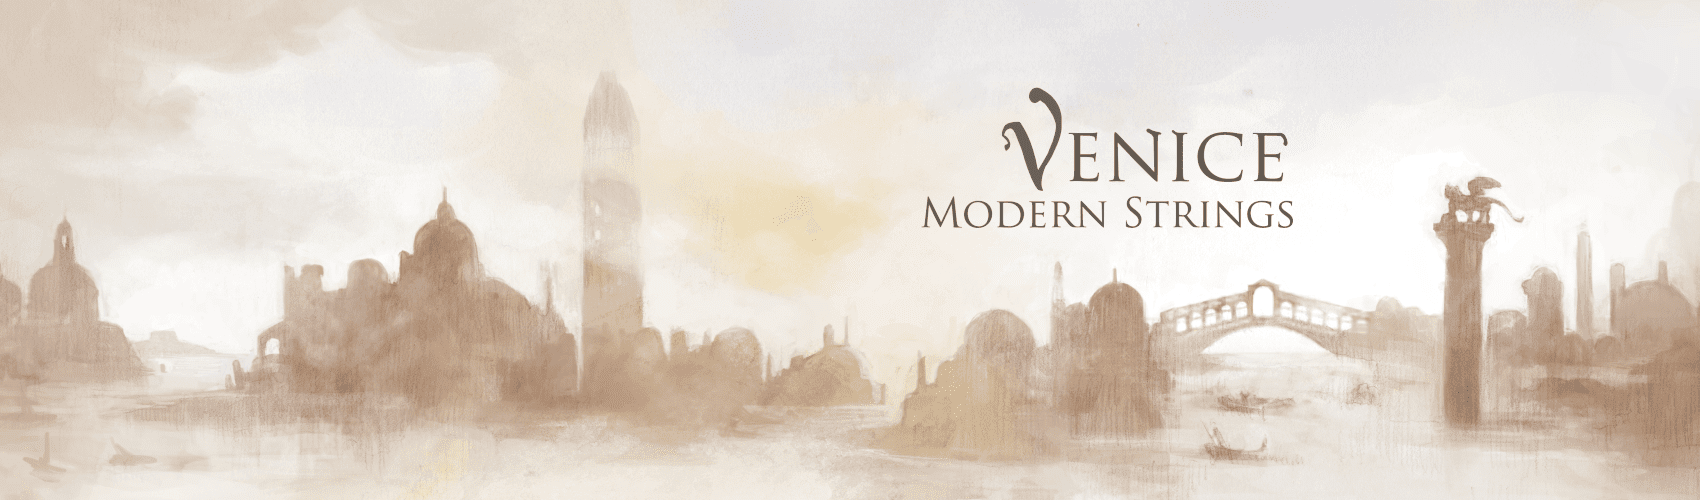 Venice Modern Strings by FluffyAudio